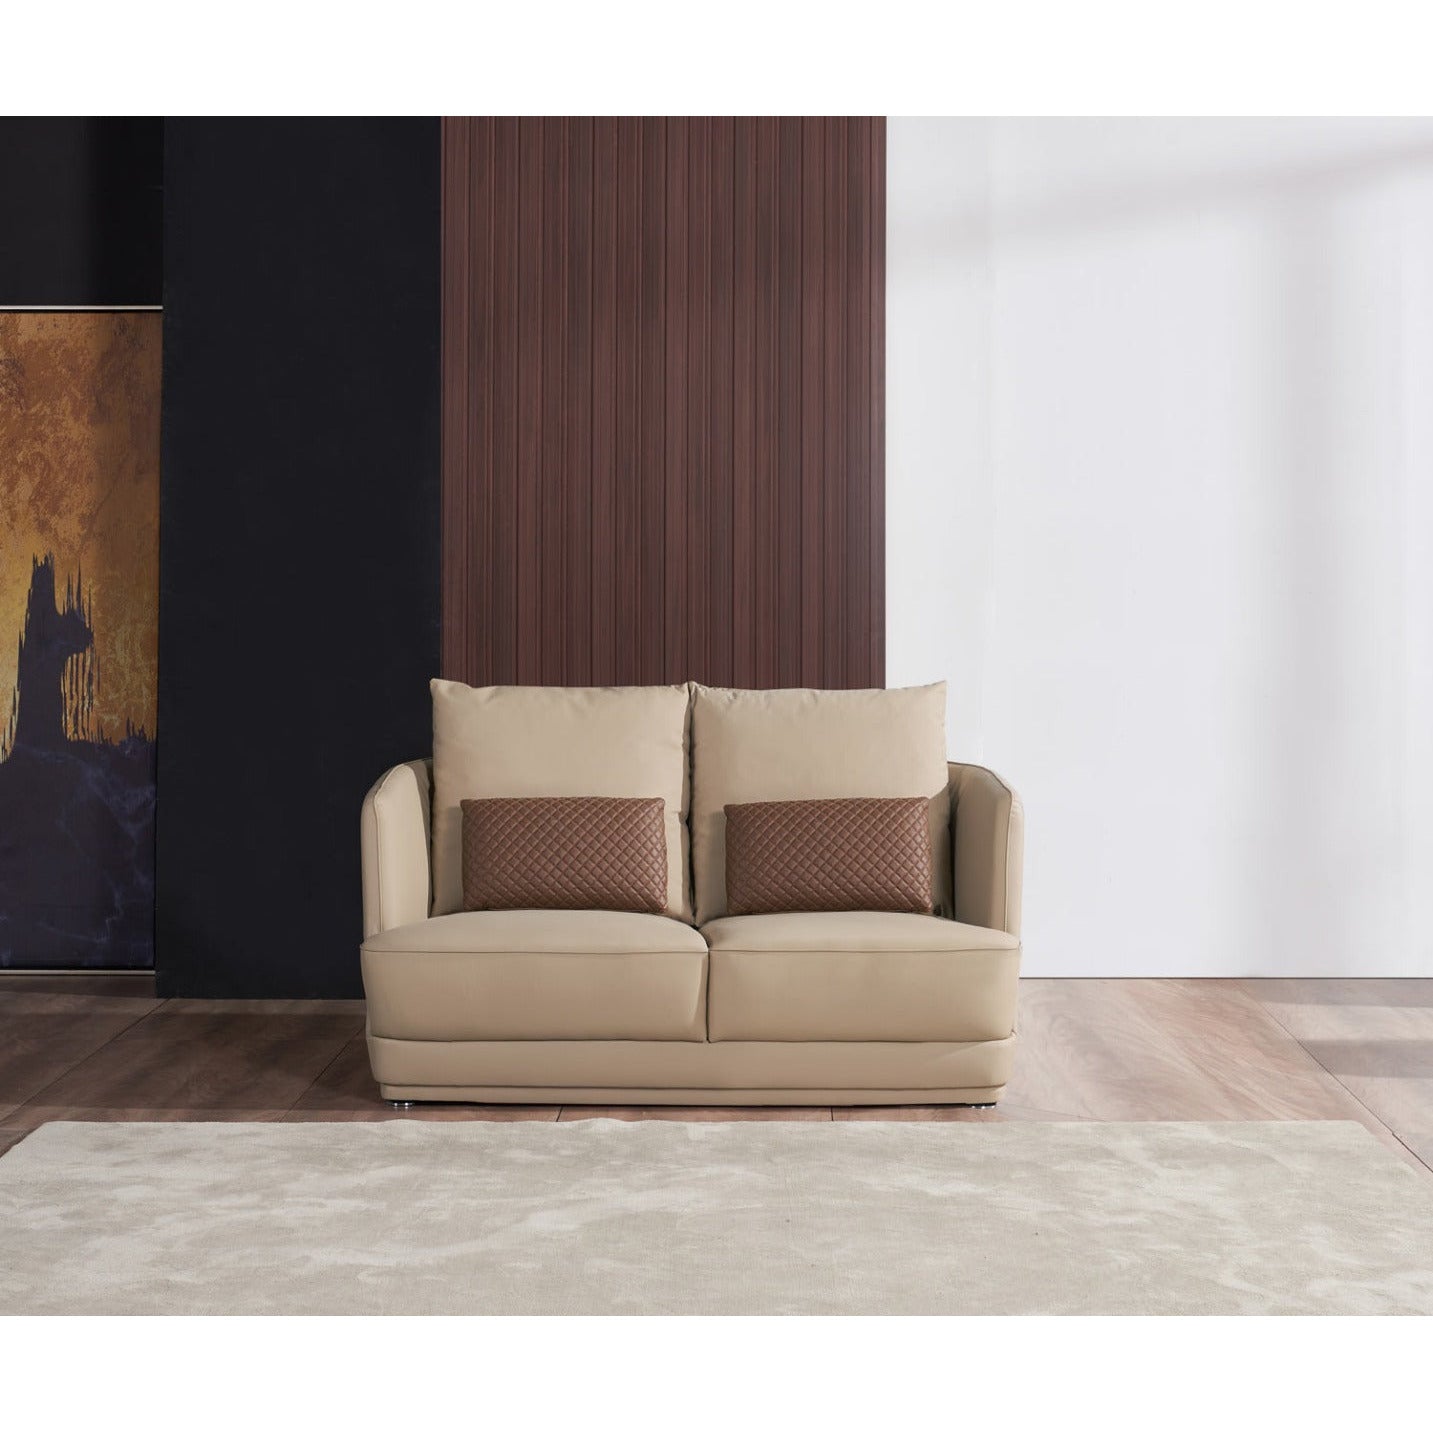 European Furniture - Glamour 3 Piece Living Room Set in Tan-Brown - 51617-3SET - New Star Living